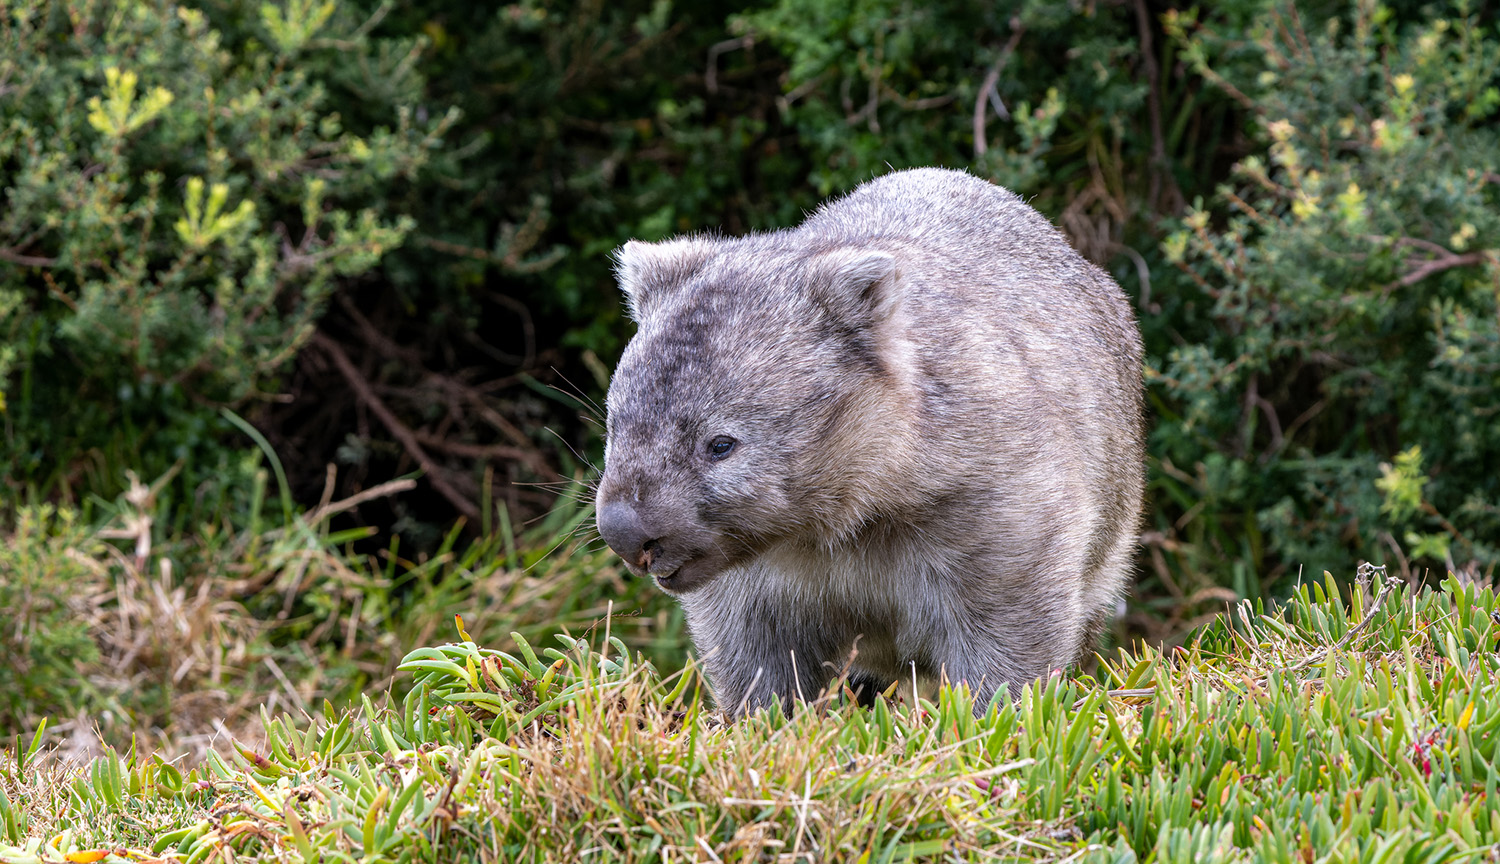 Gray wombat amid foliage and grass.